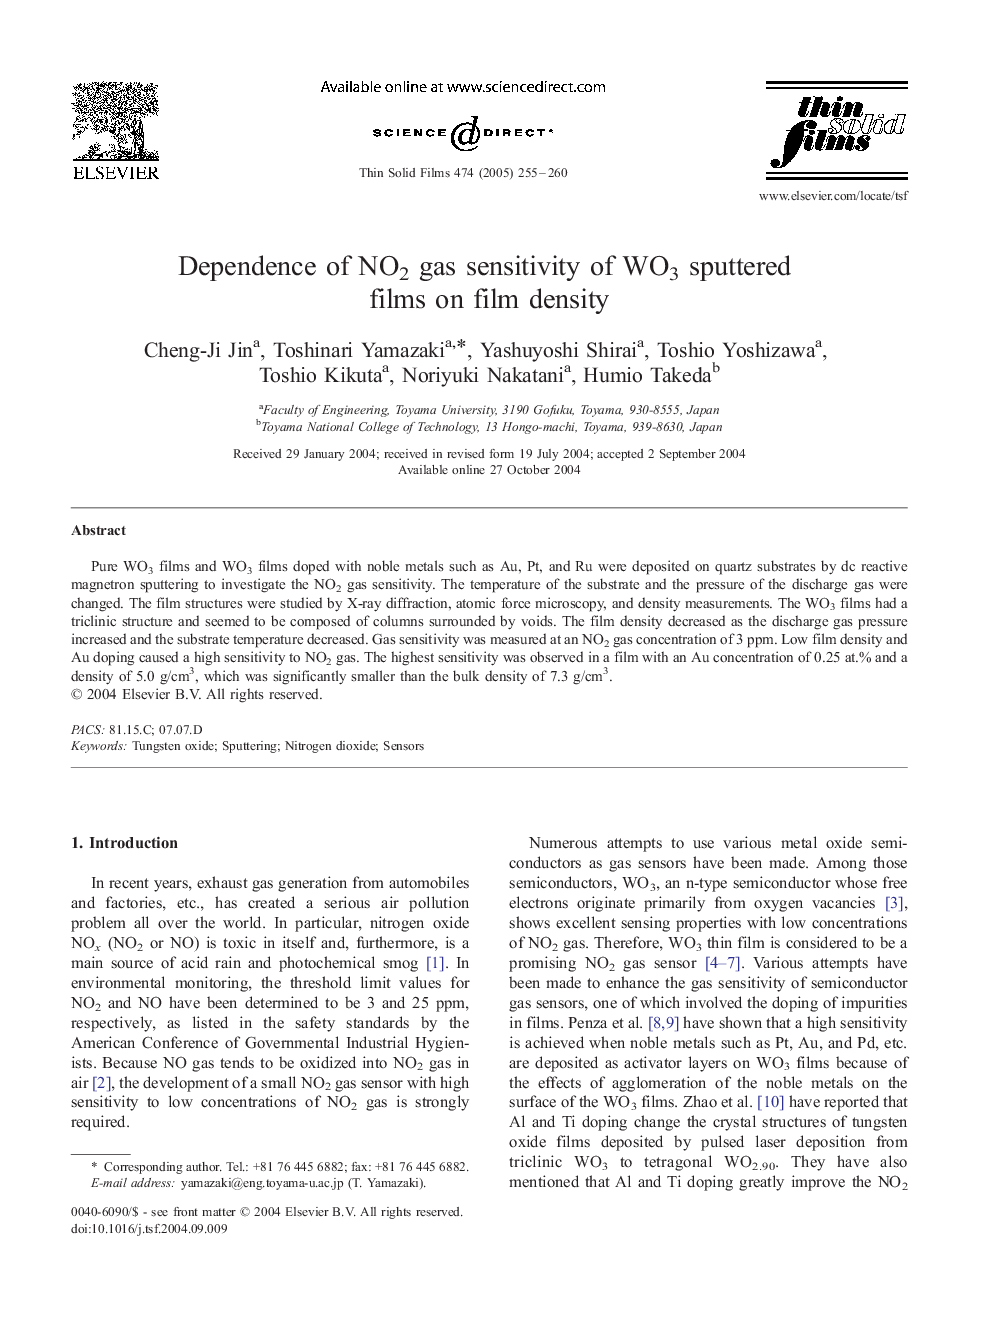 Dependence of NO2 gas sensitivity of WO3 sputtered films on film density